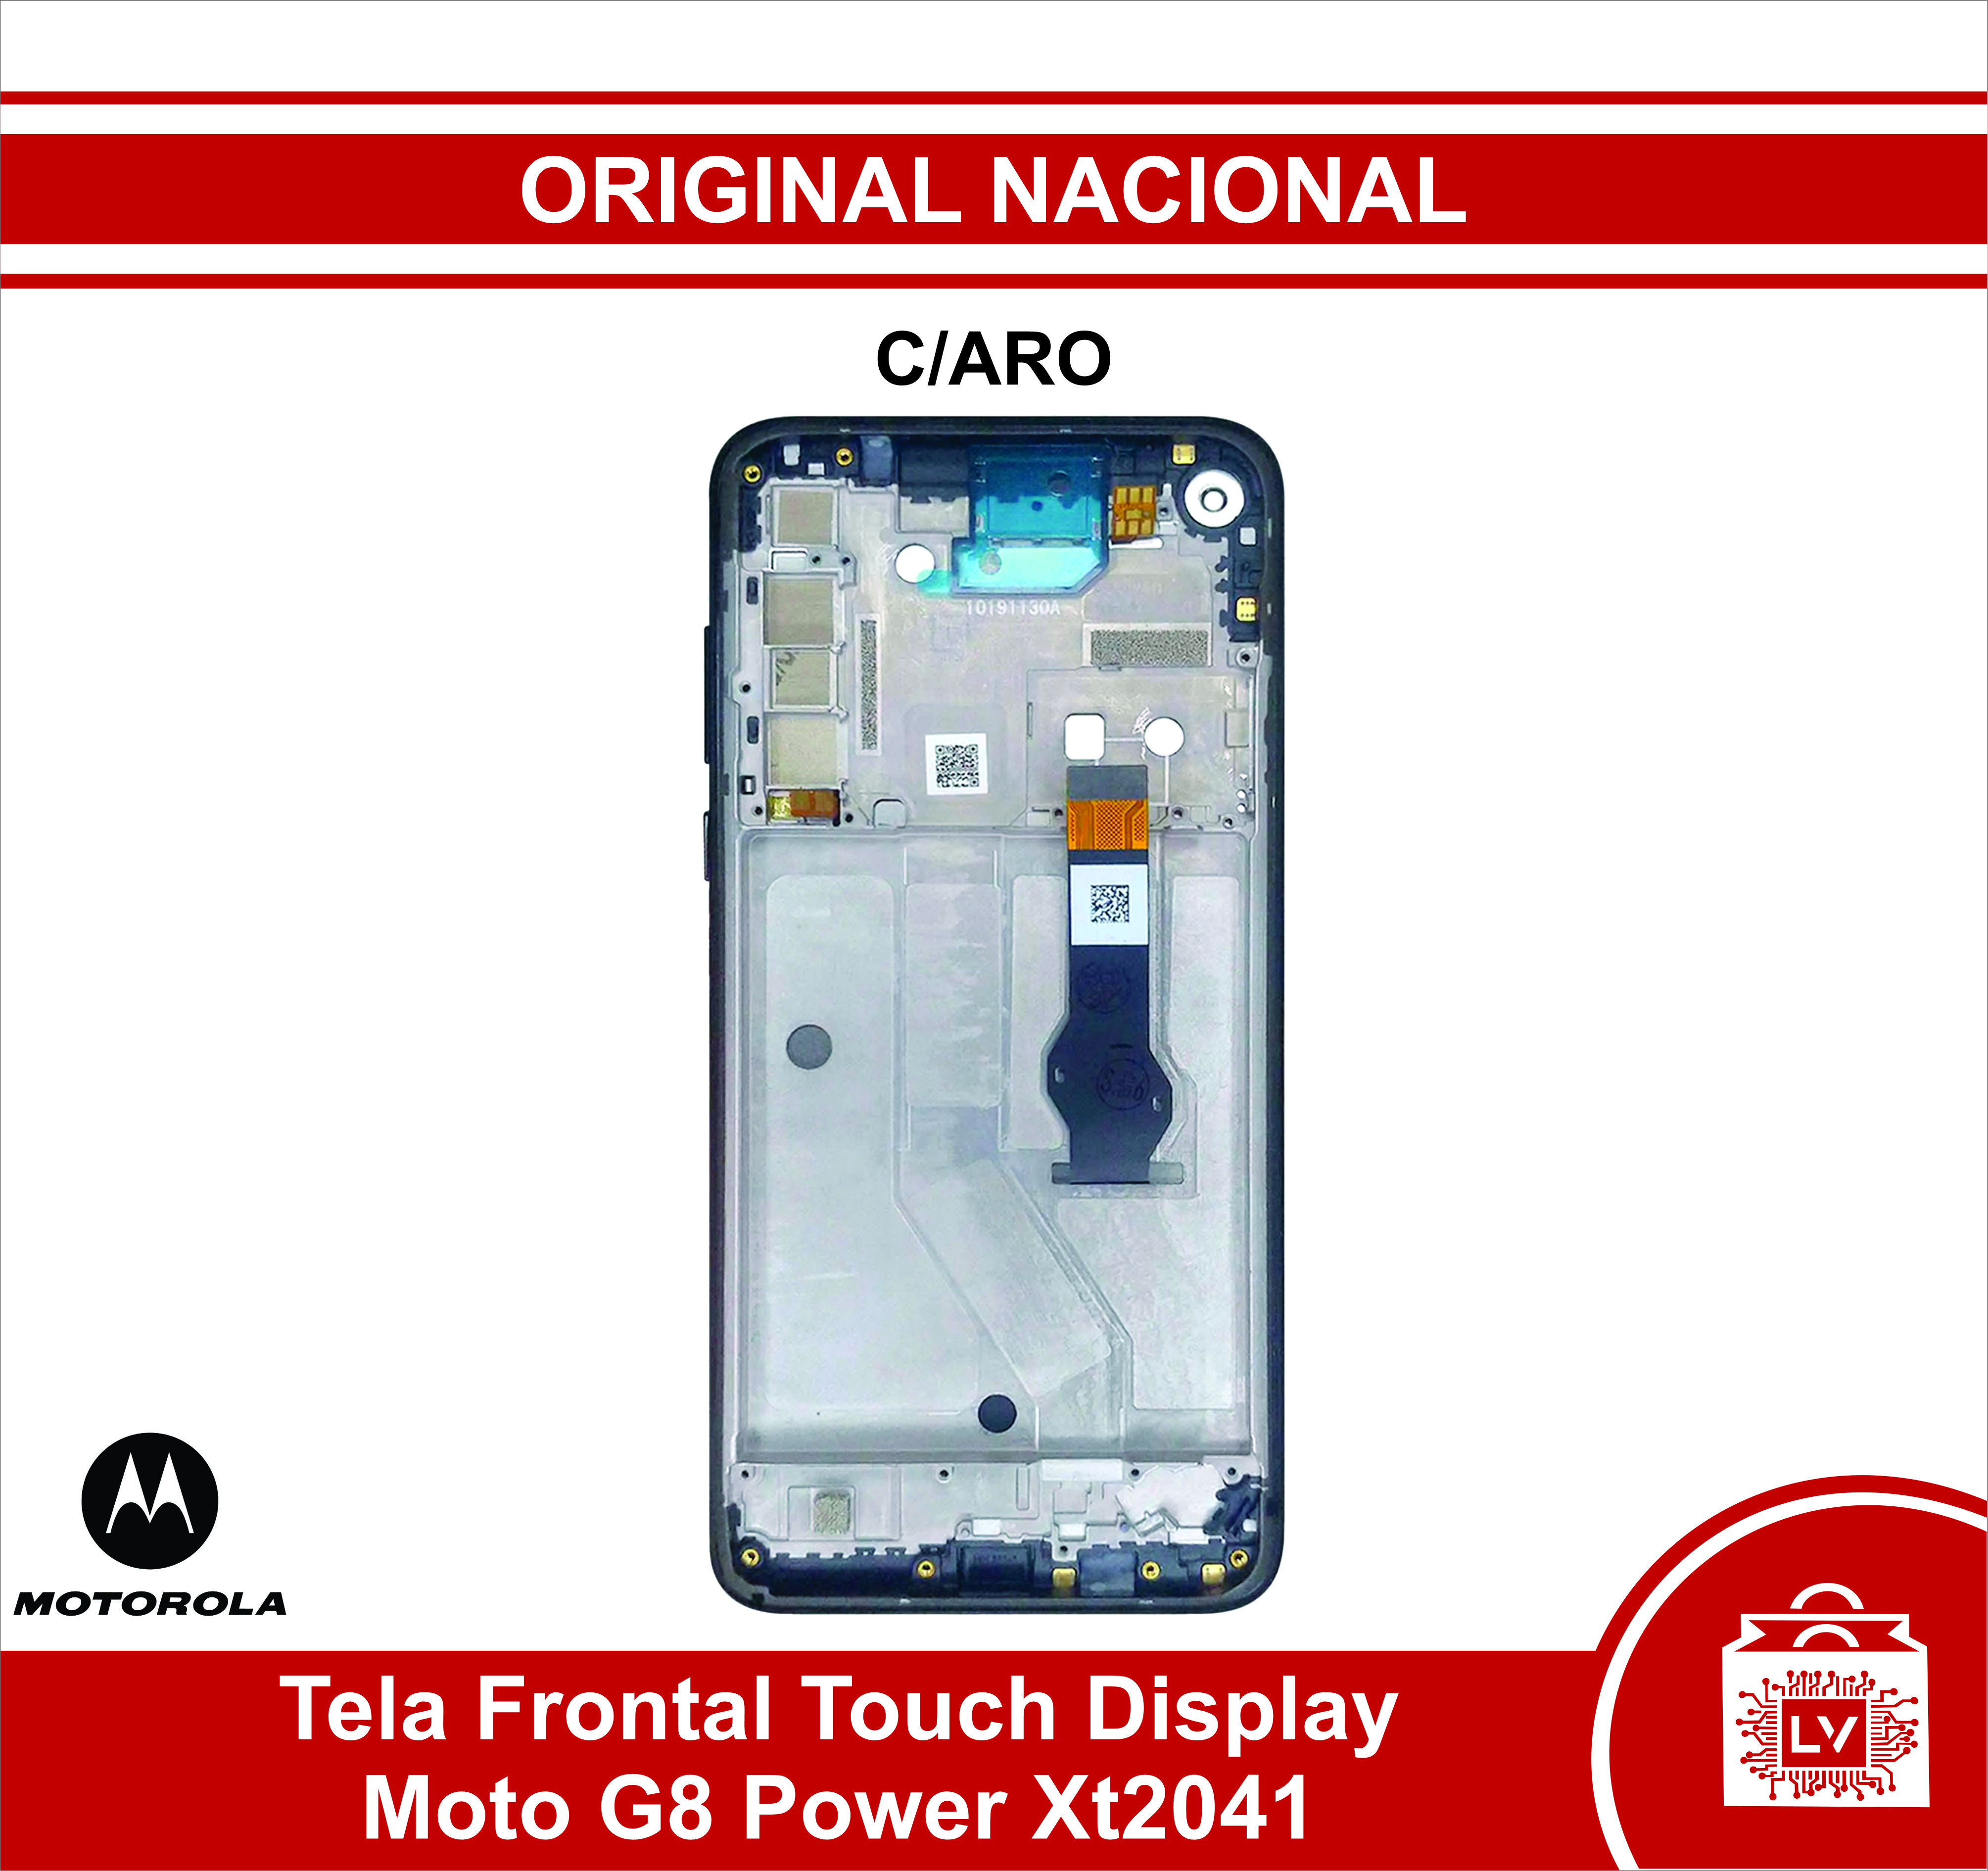 Tela Frontal Touch Display Moto G8 Power Xt2041